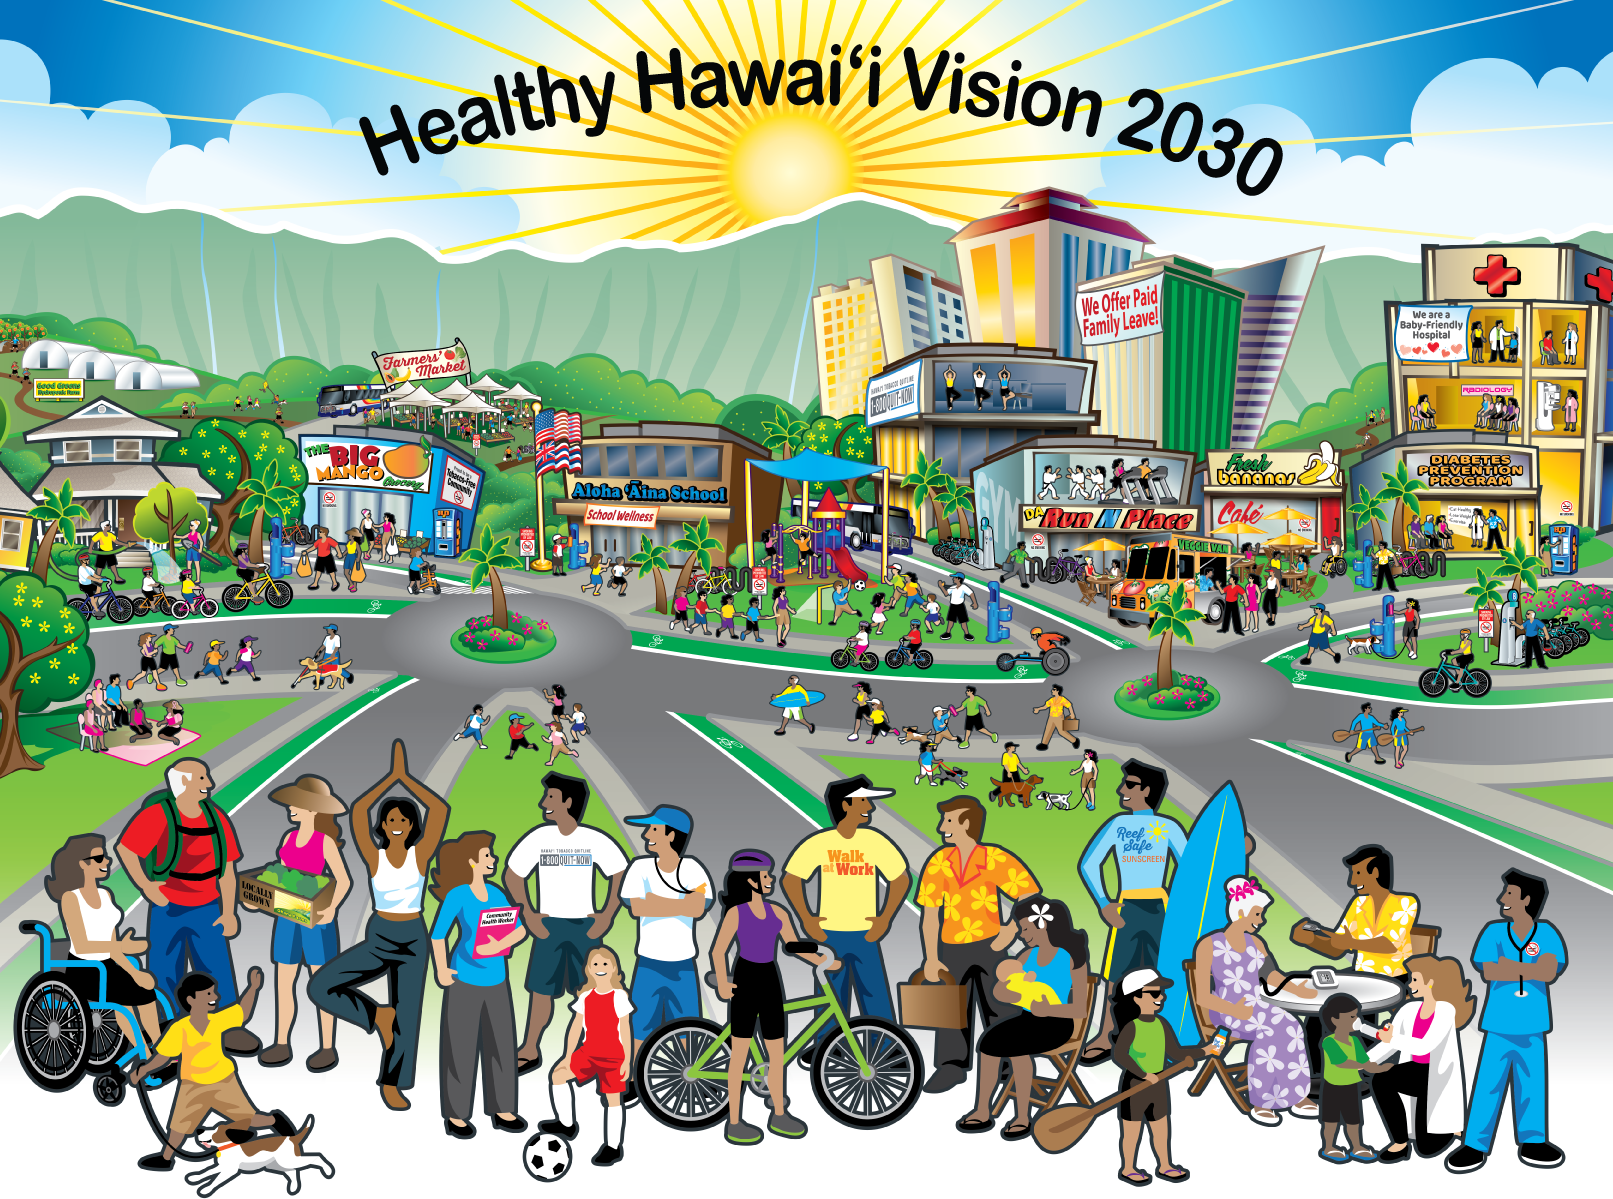 Healthy Hawaii Vision 2030